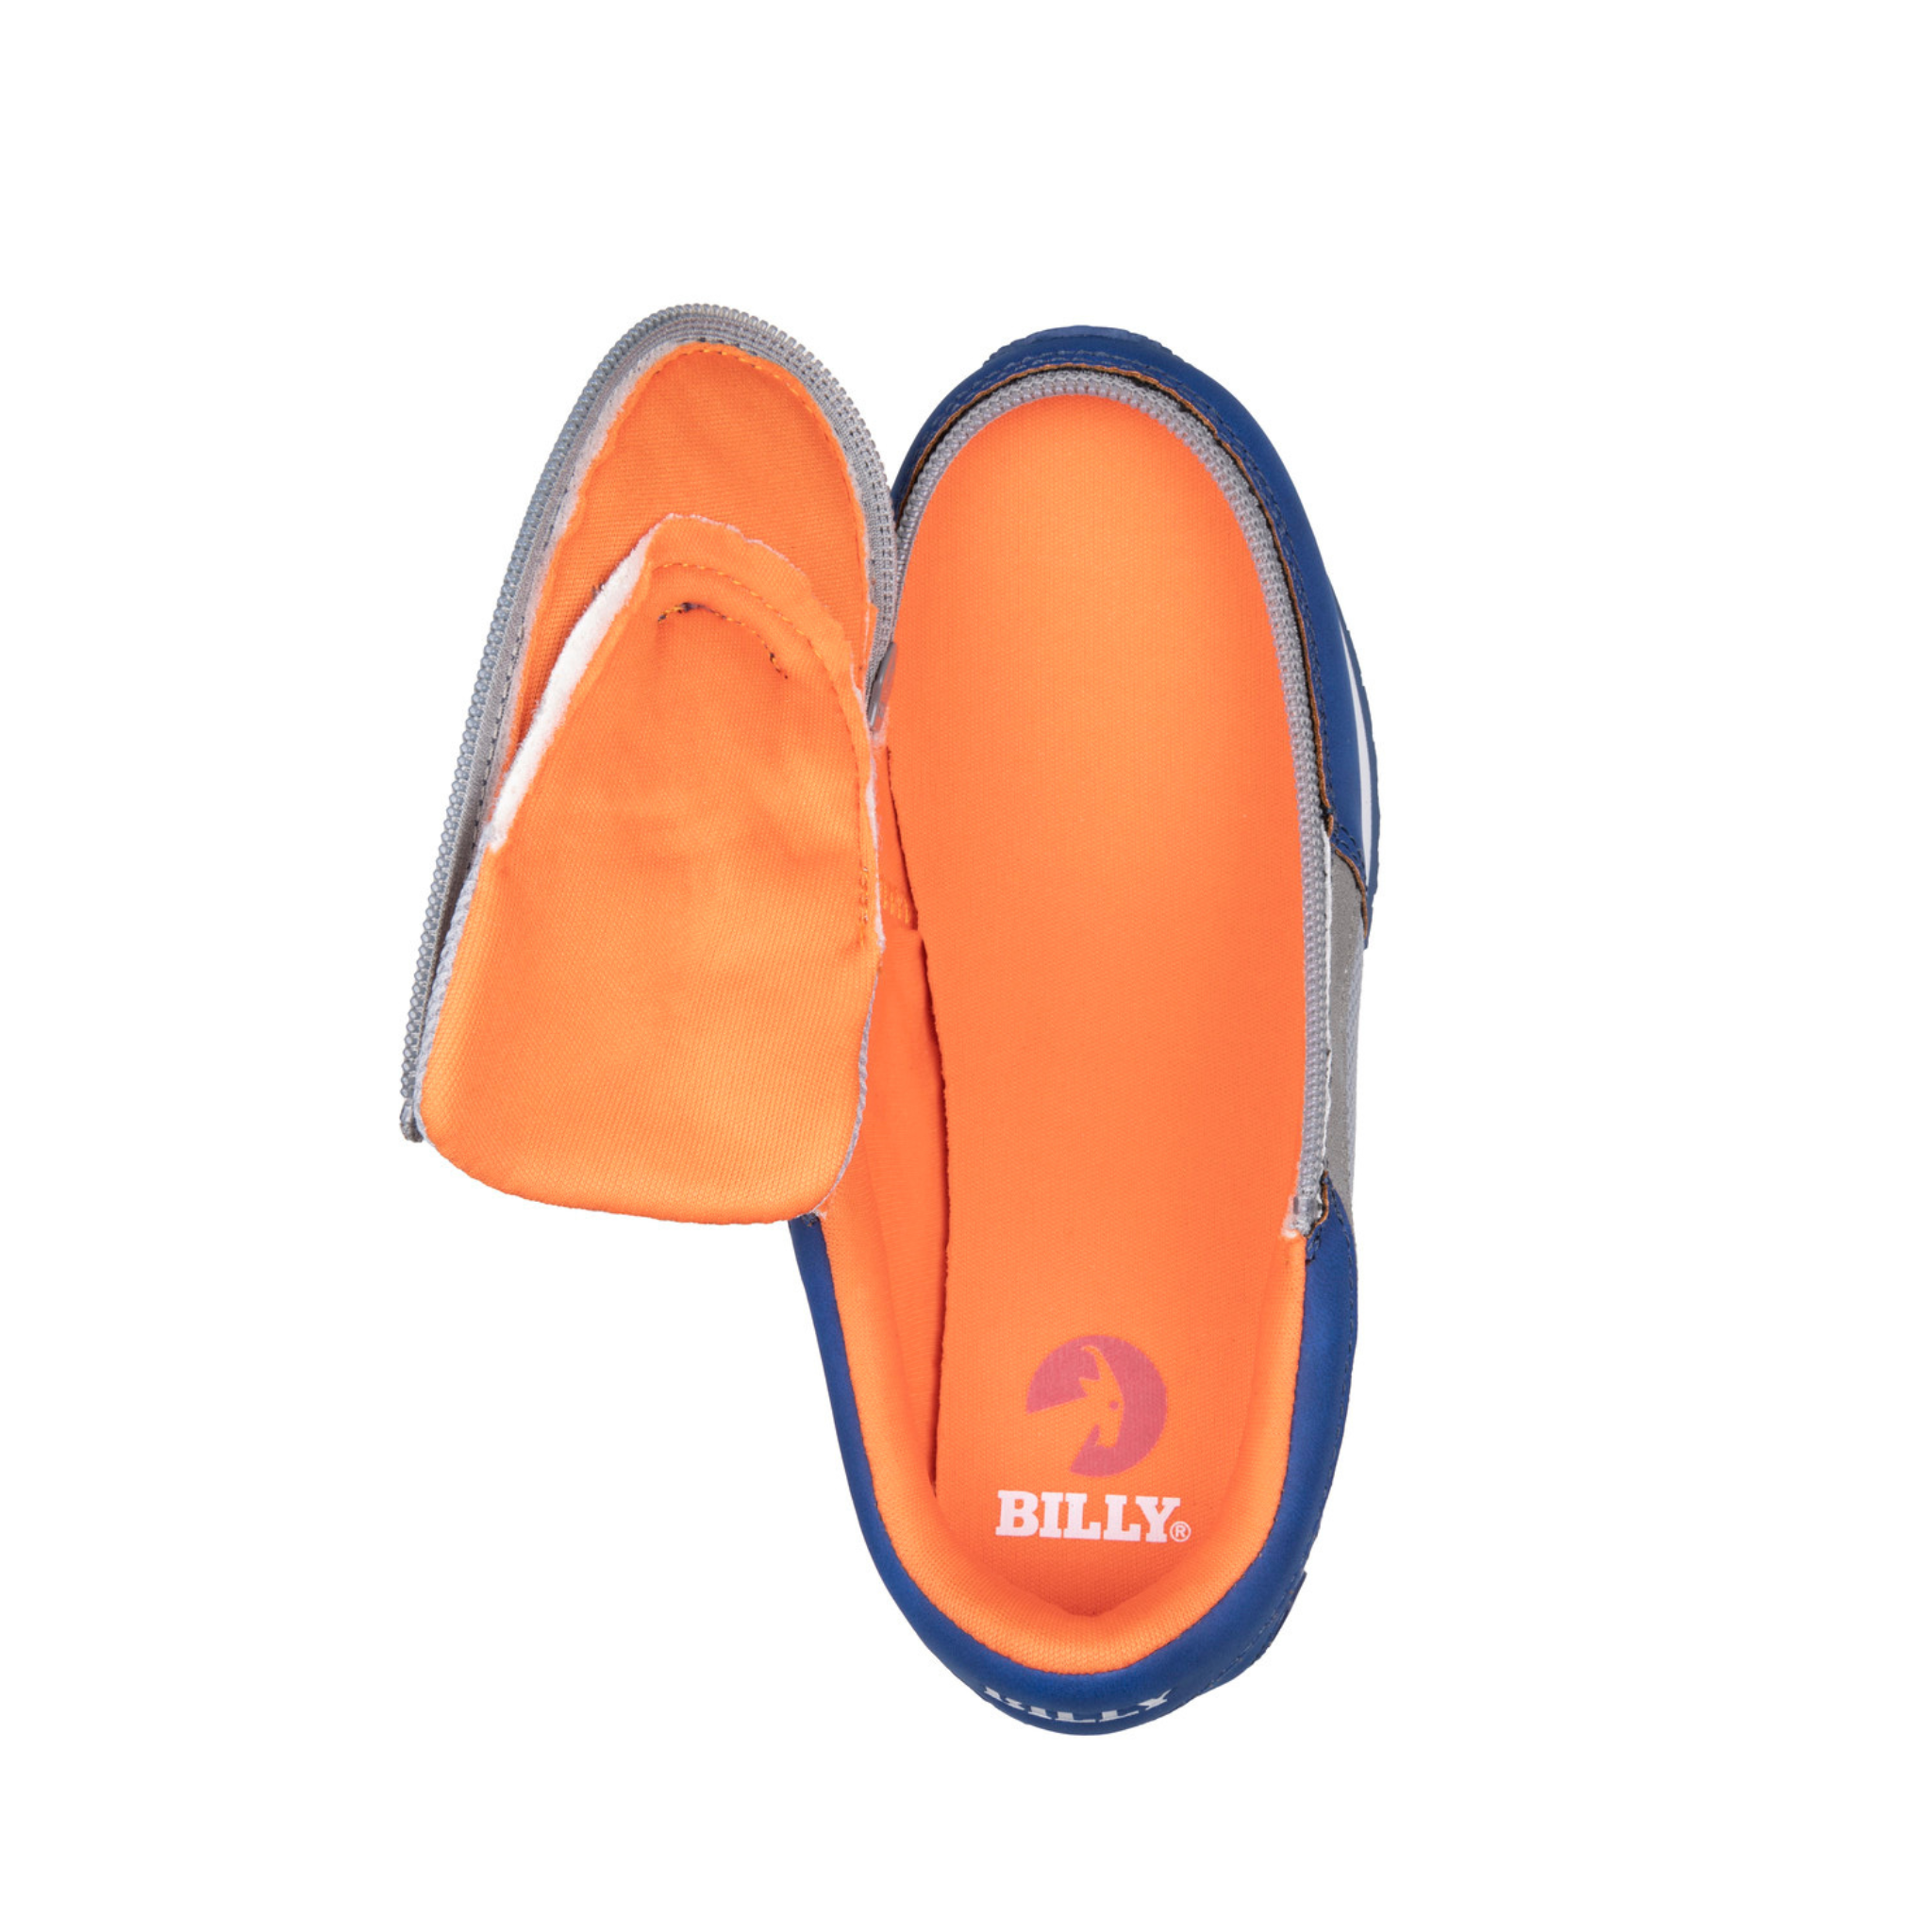 Billy Footwear (Kids) - Trainers Faux Suede Navy / Orange